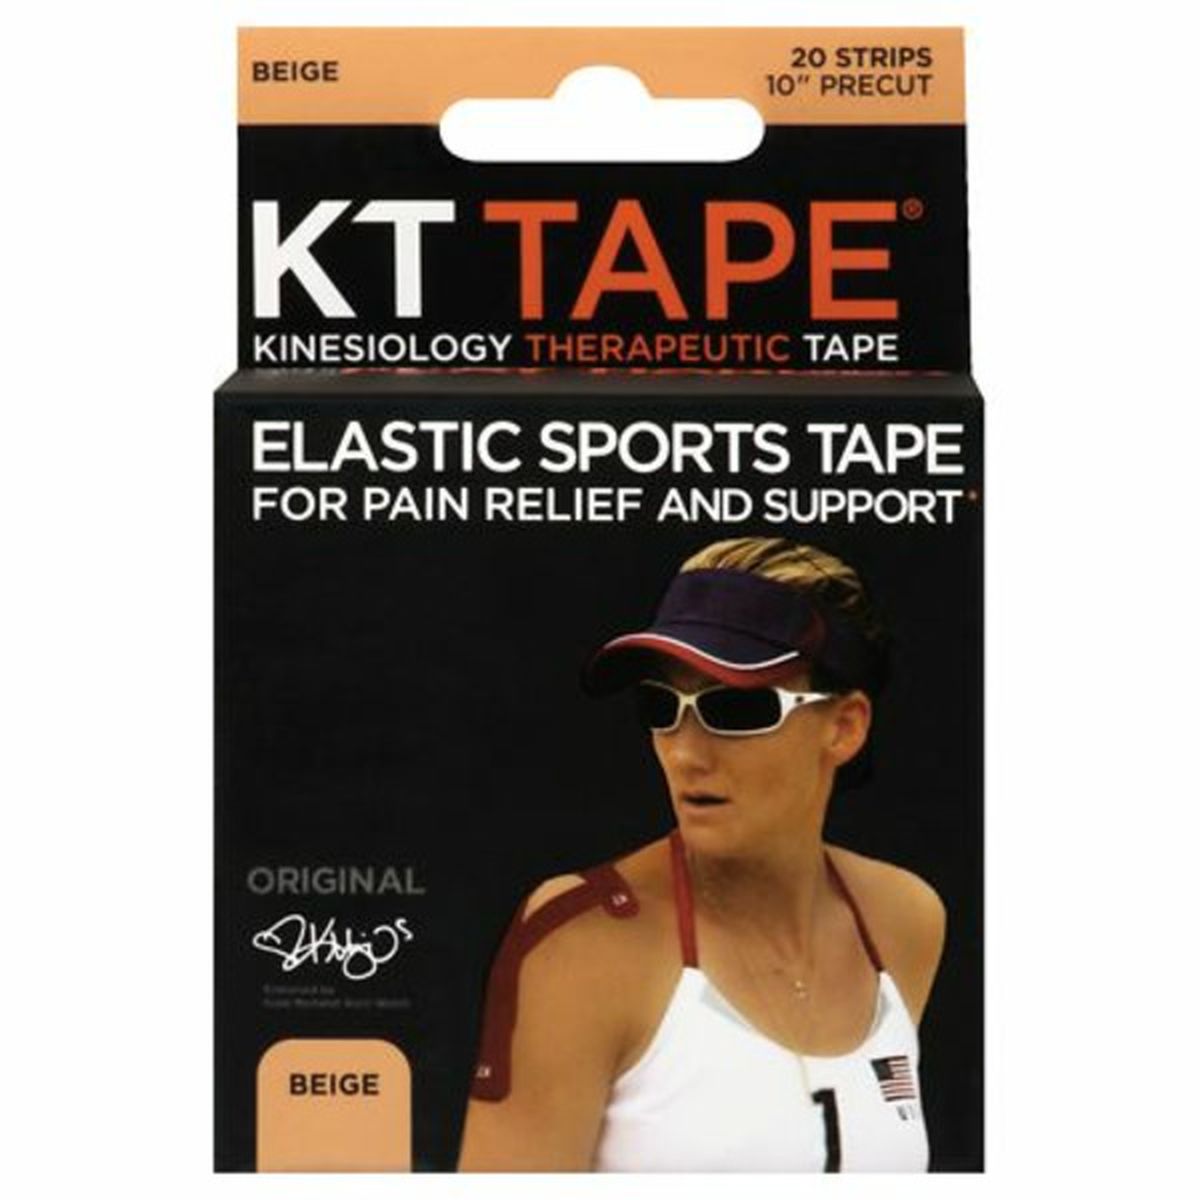 KT Tape Sports Tape, Elastic, Original, Precut Strips, Beige